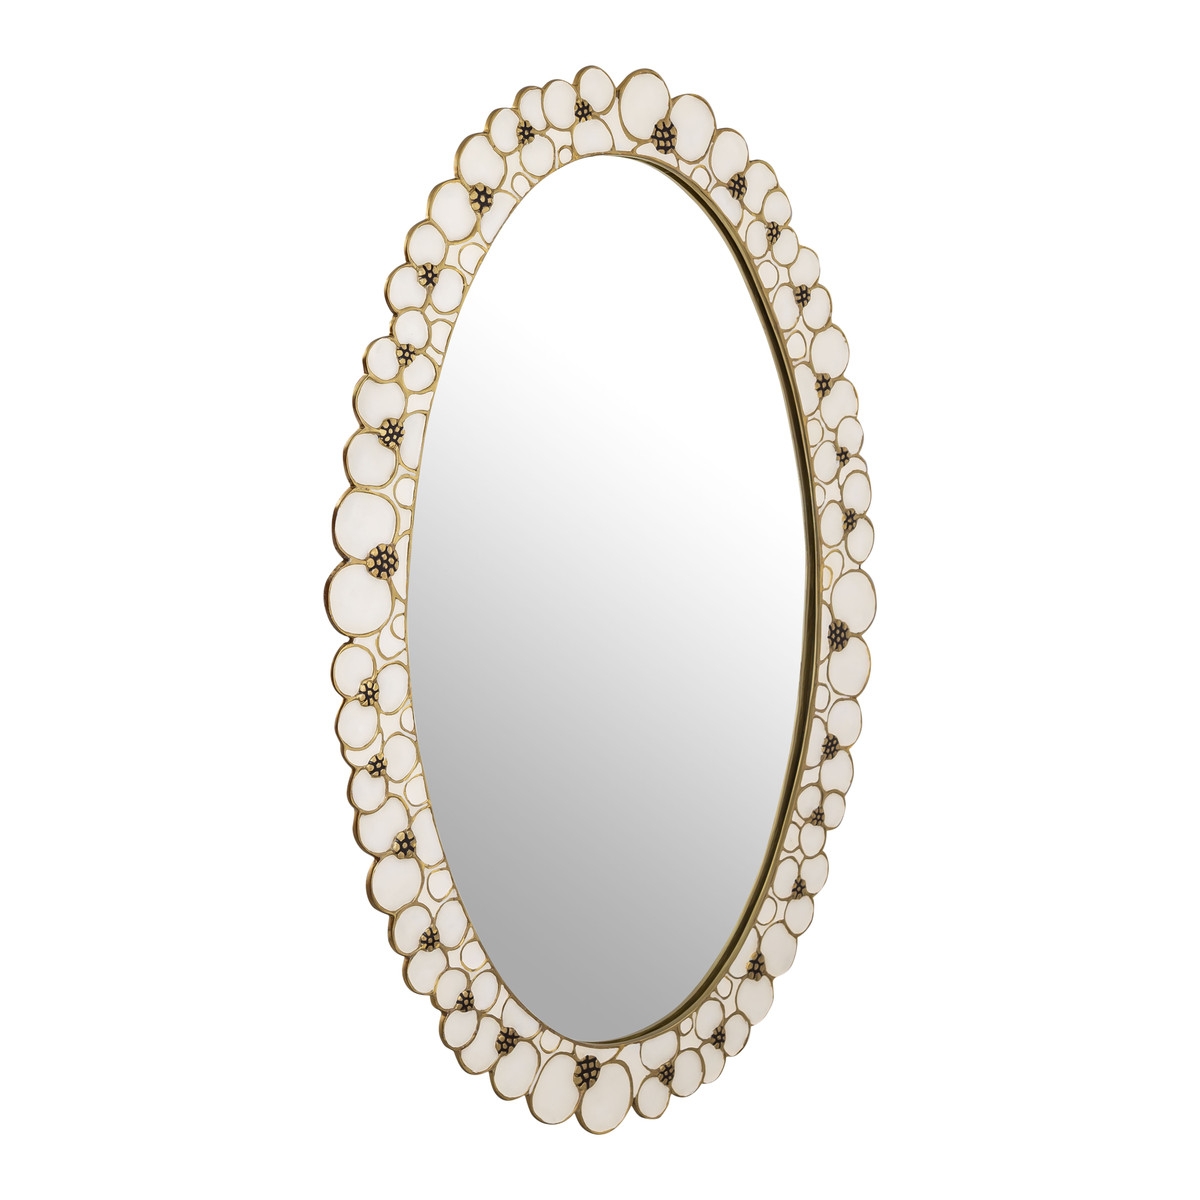 Flor Handpainted Mirror - Image 1